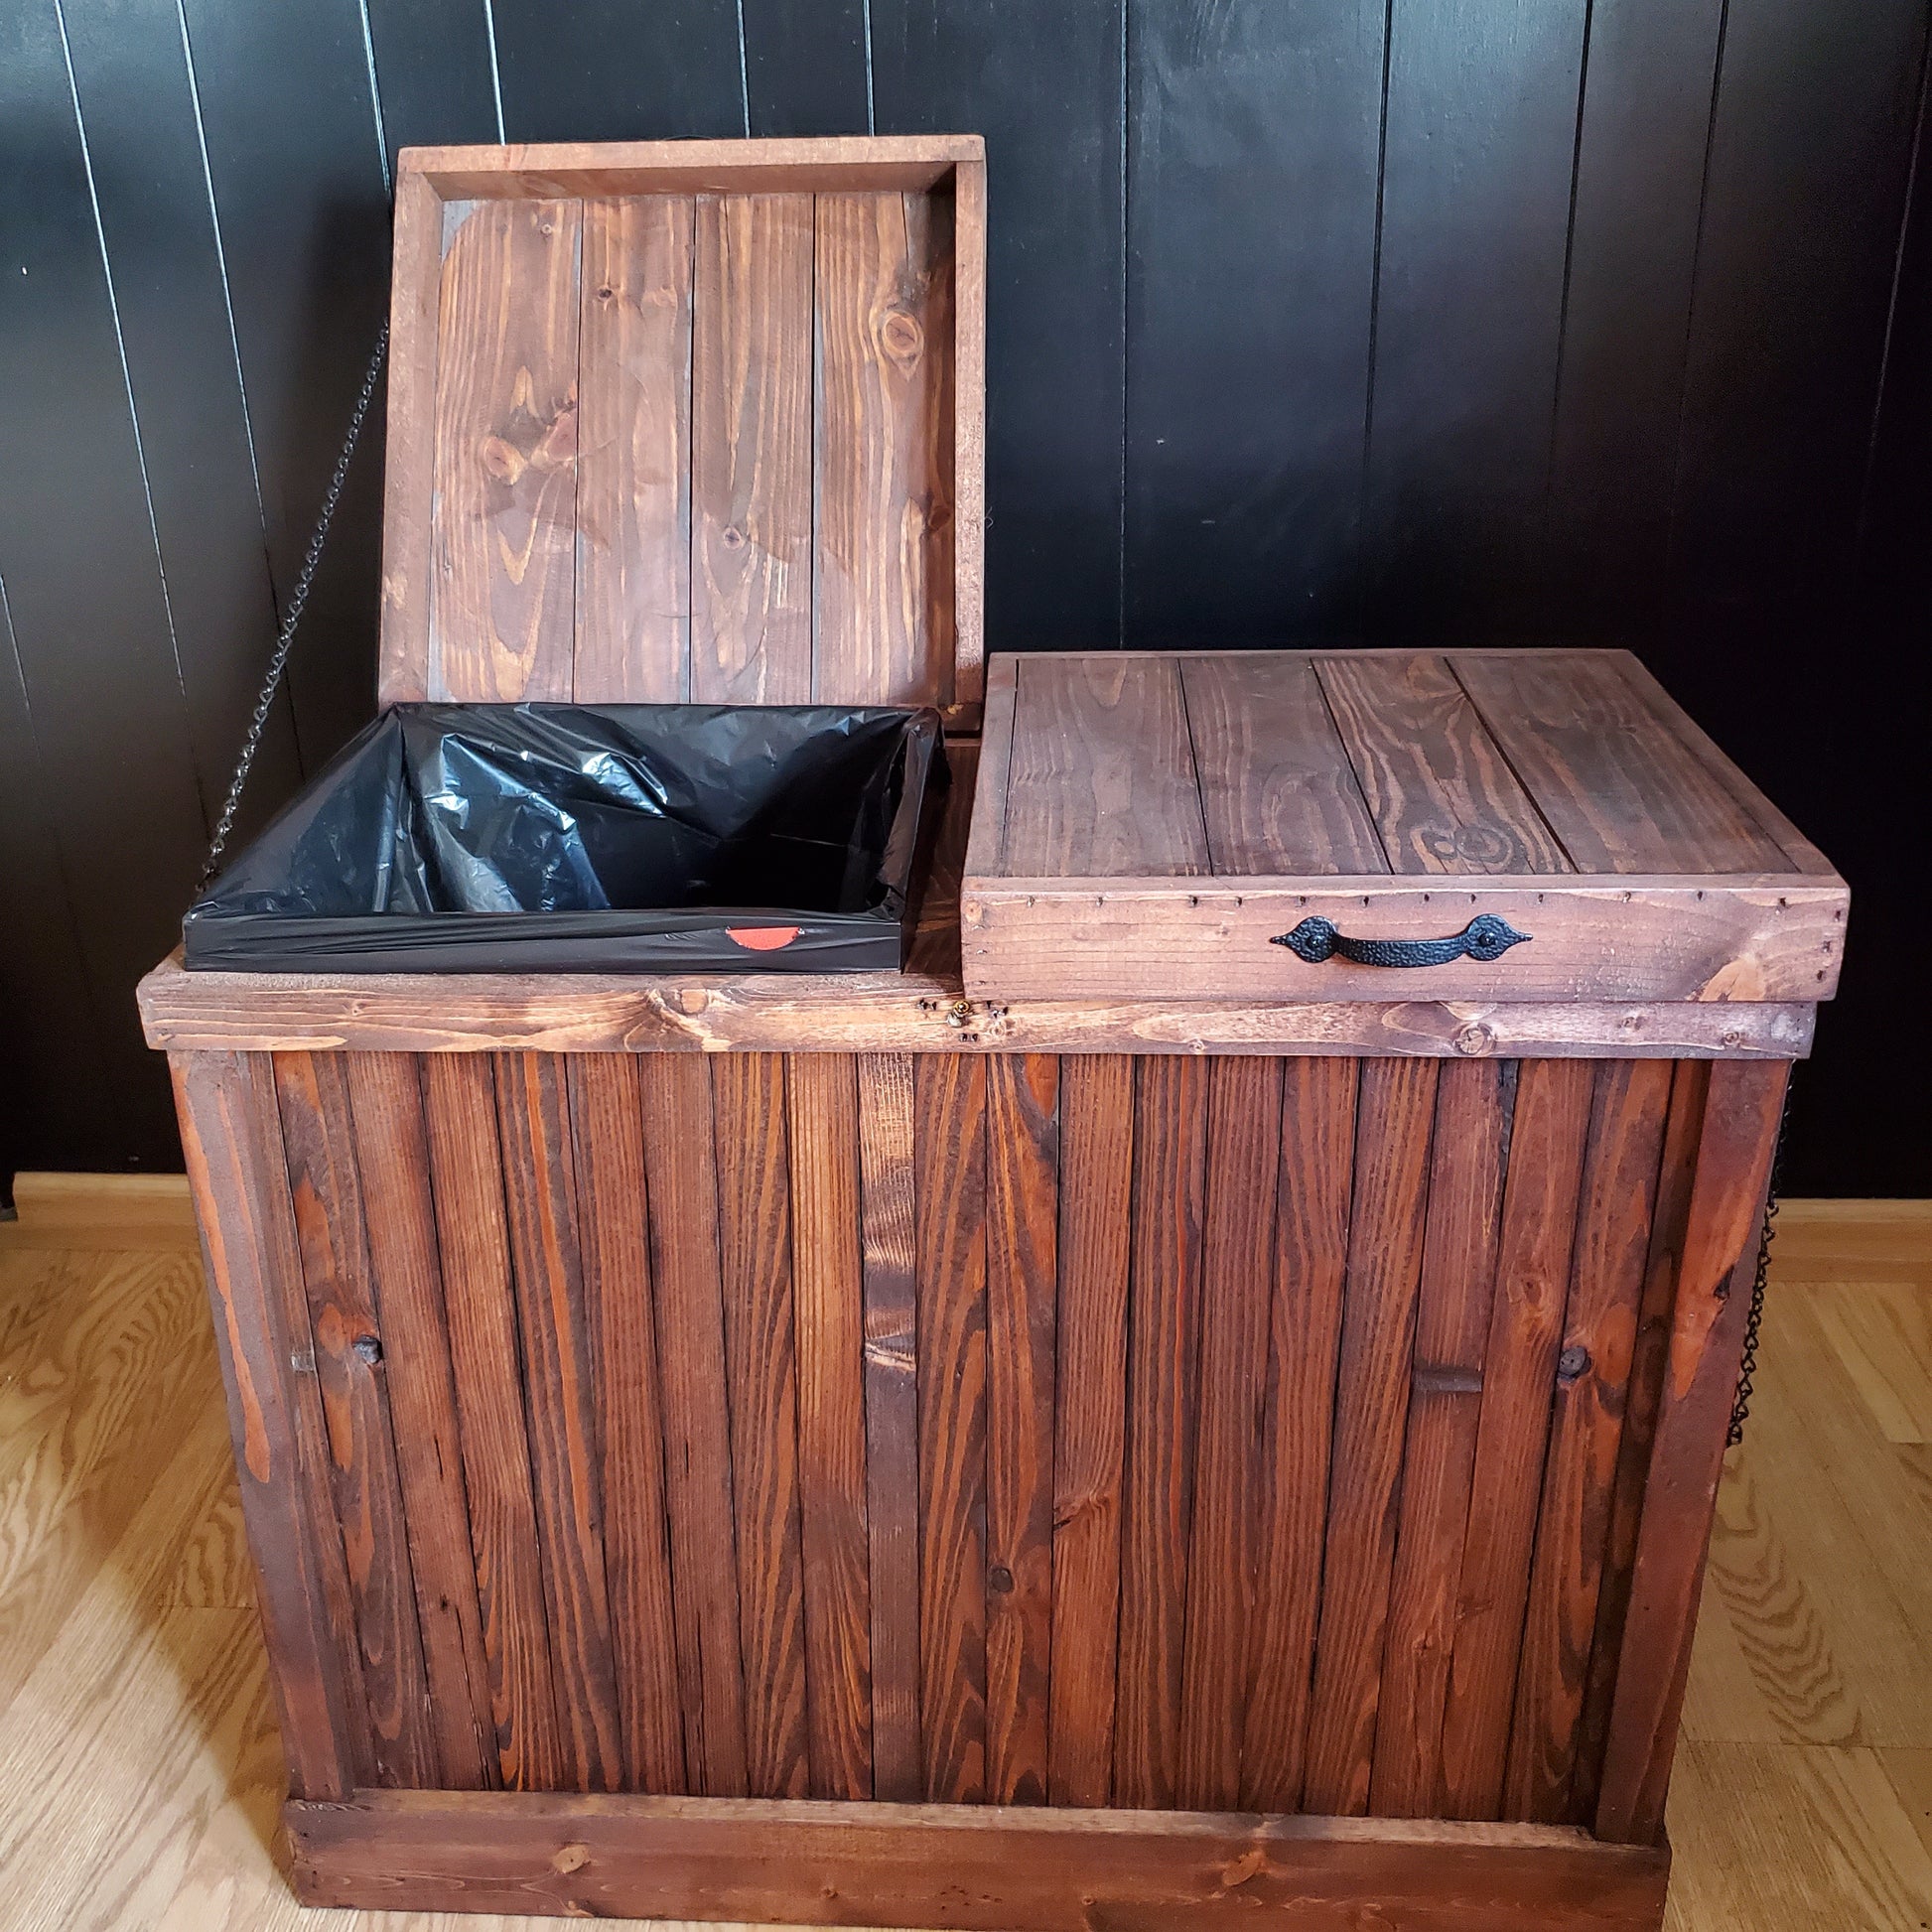 Wood Trash Can 30 Gallon No Decor – THH Creations